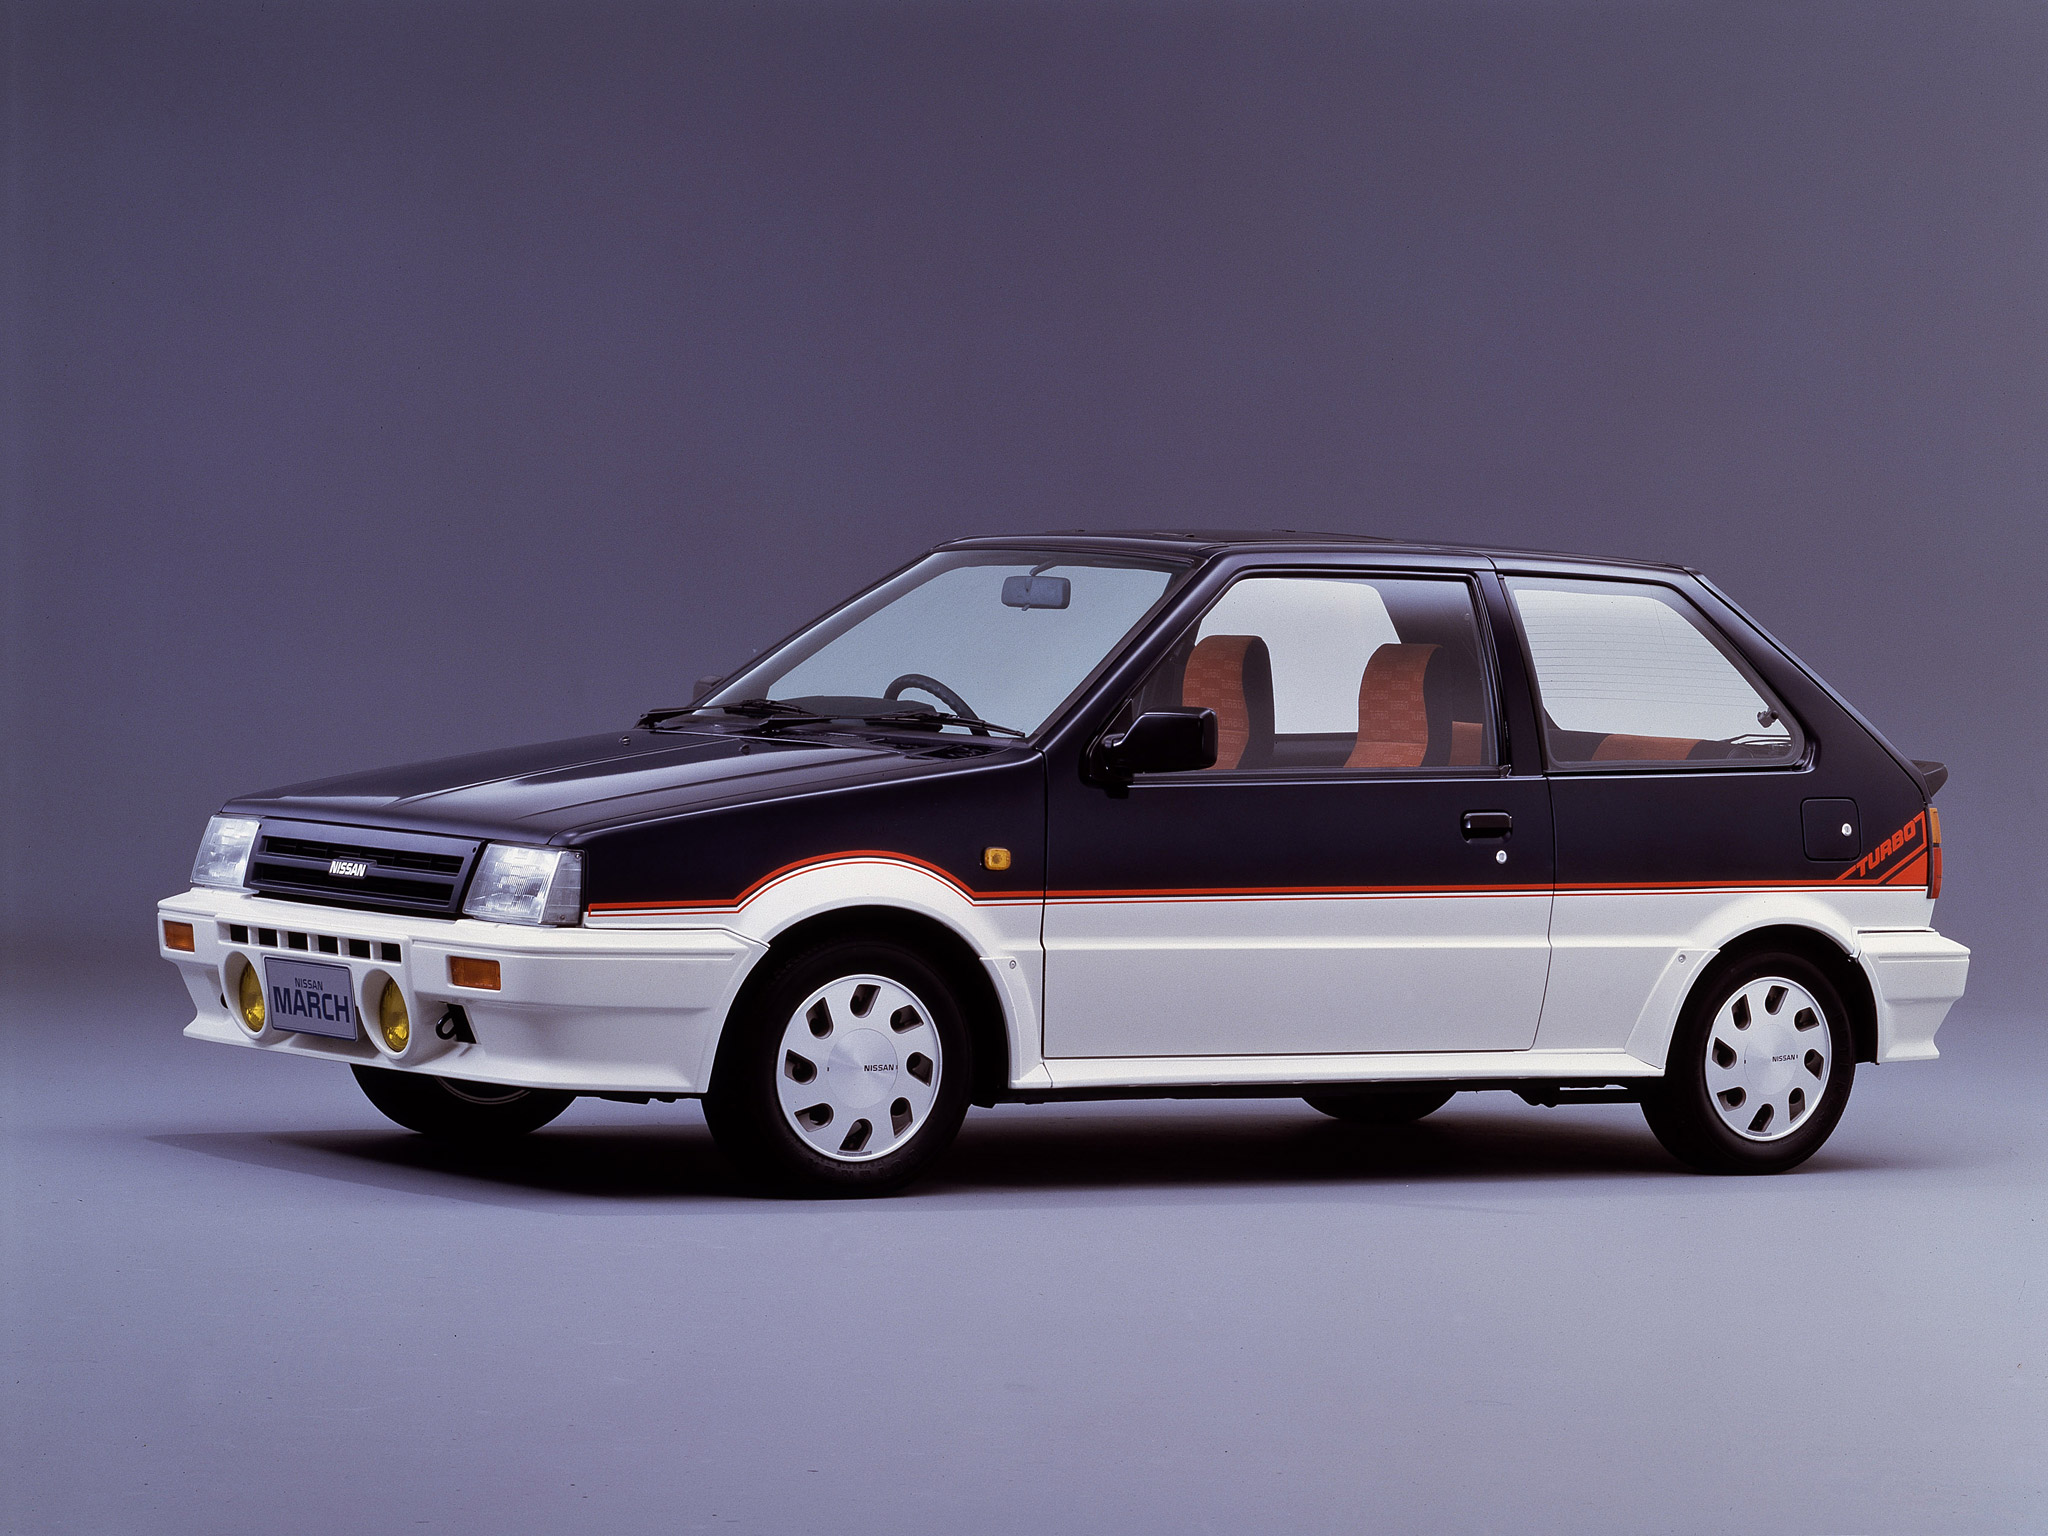  1985 Nissan March Turbo Wallpaper.